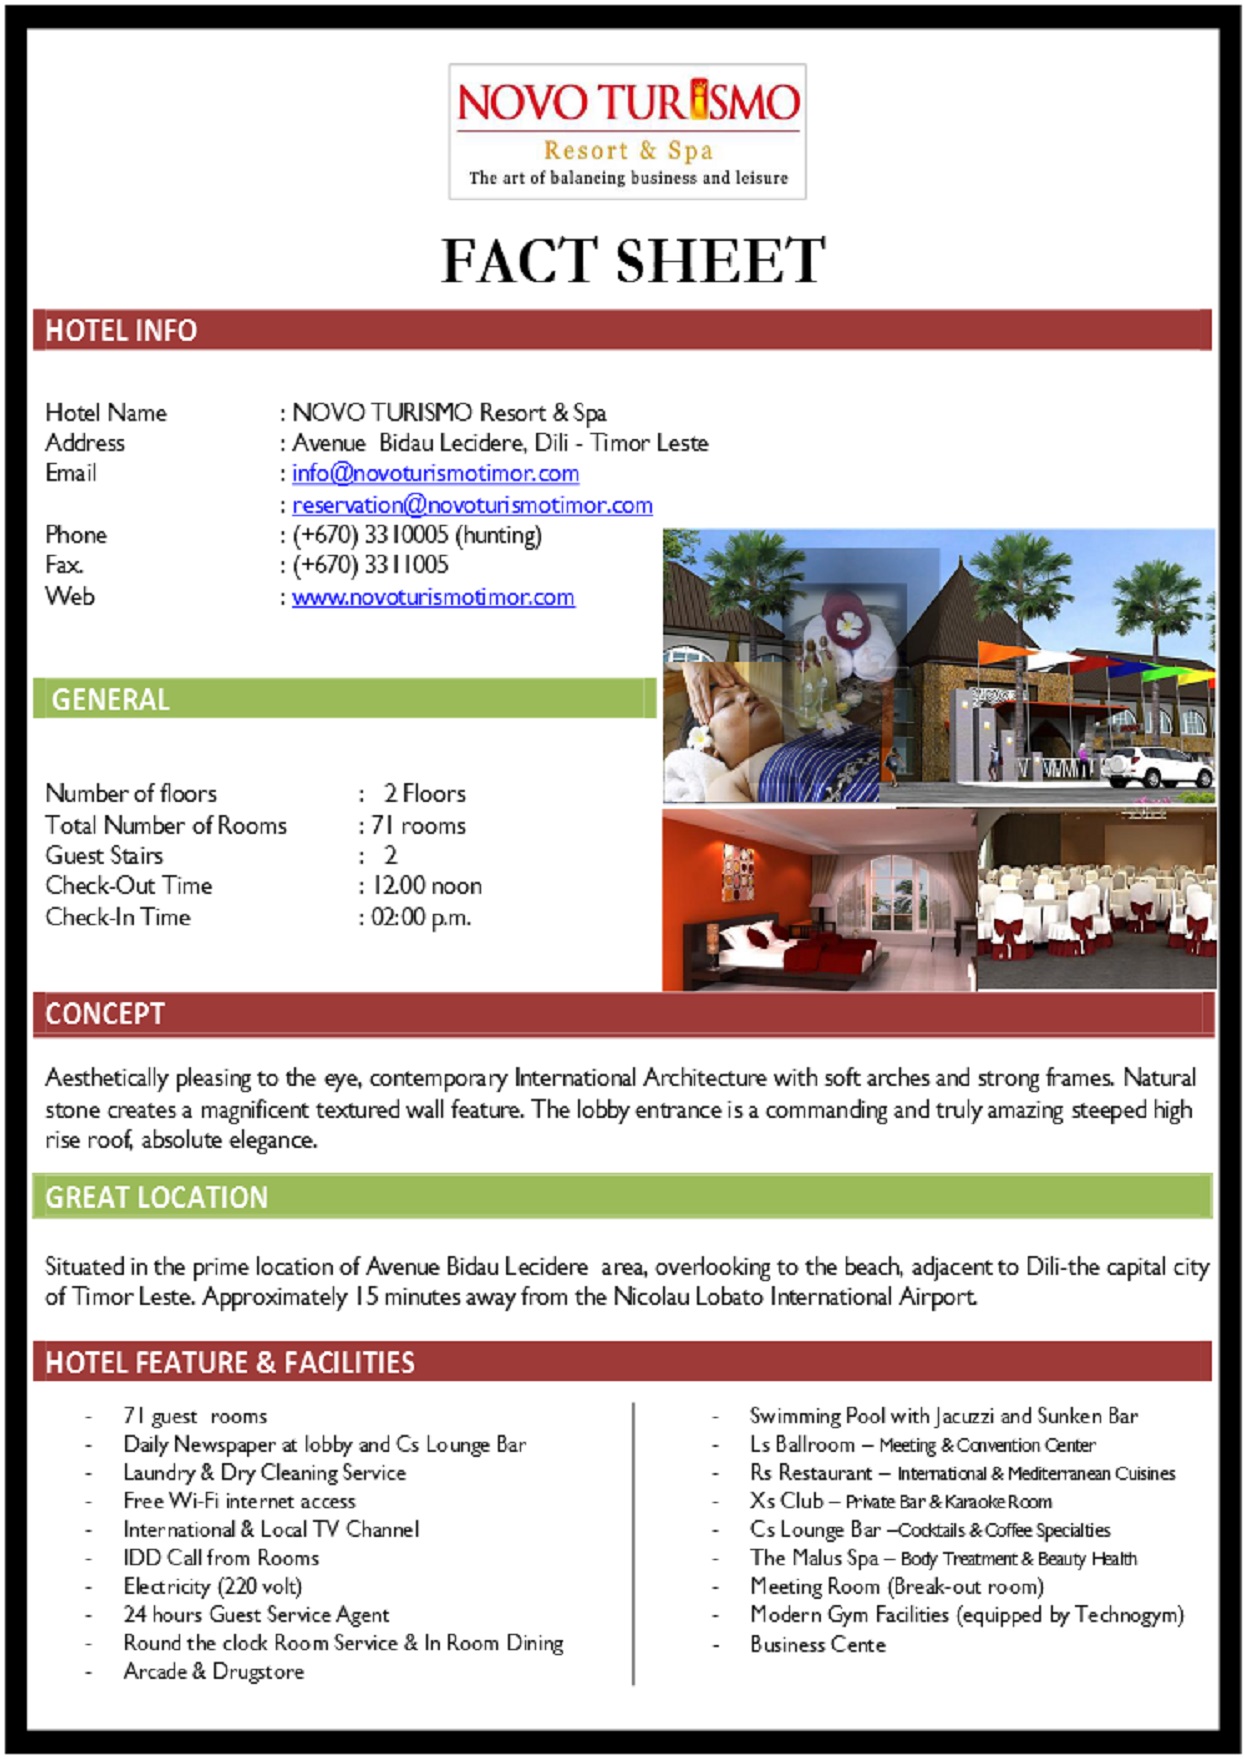 Novo Turismo Resort and Spa in Dili